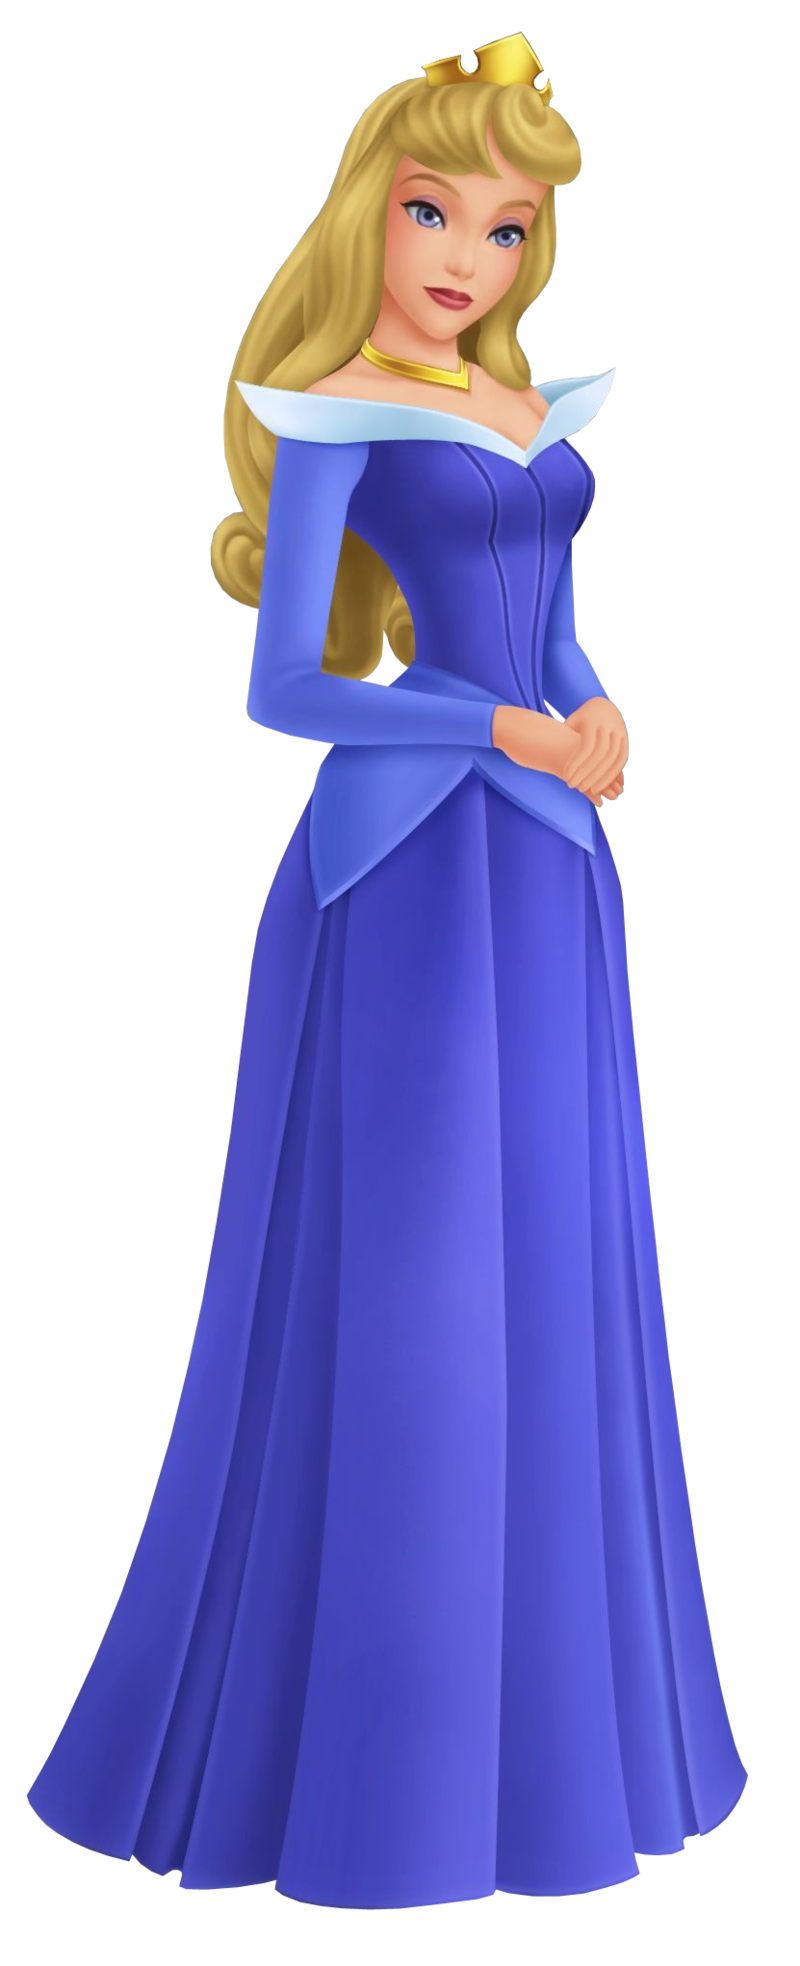 disney princess aurora blue dress